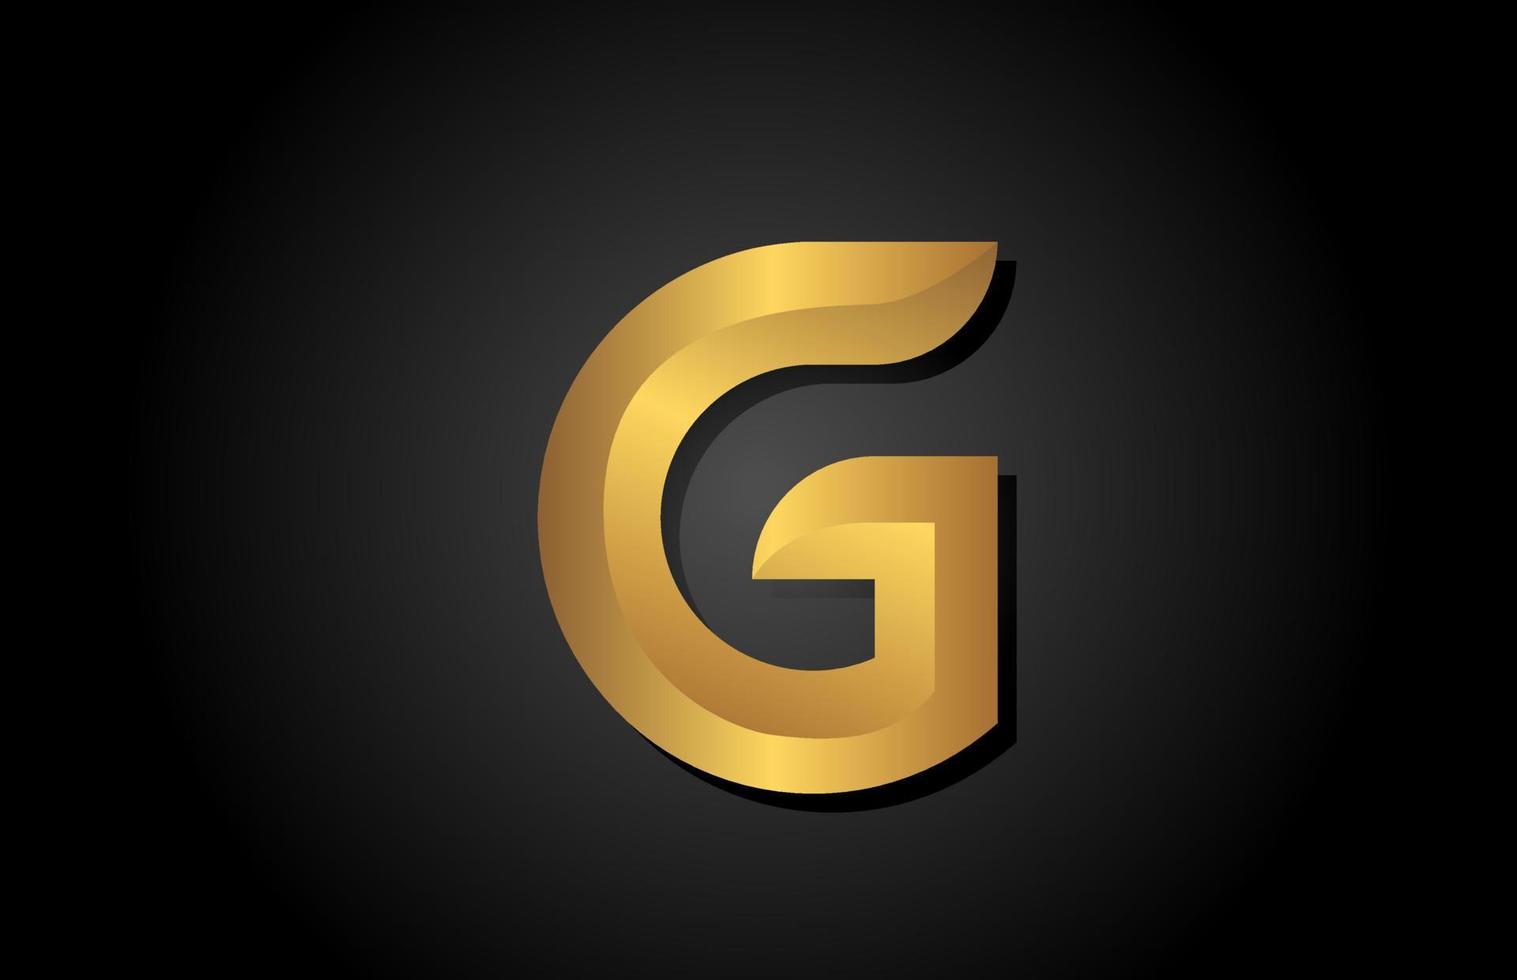 ouro dourado g design de ícone do logotipo da letra do alfabeto. modelo de empresa para negócios de luxo vetor